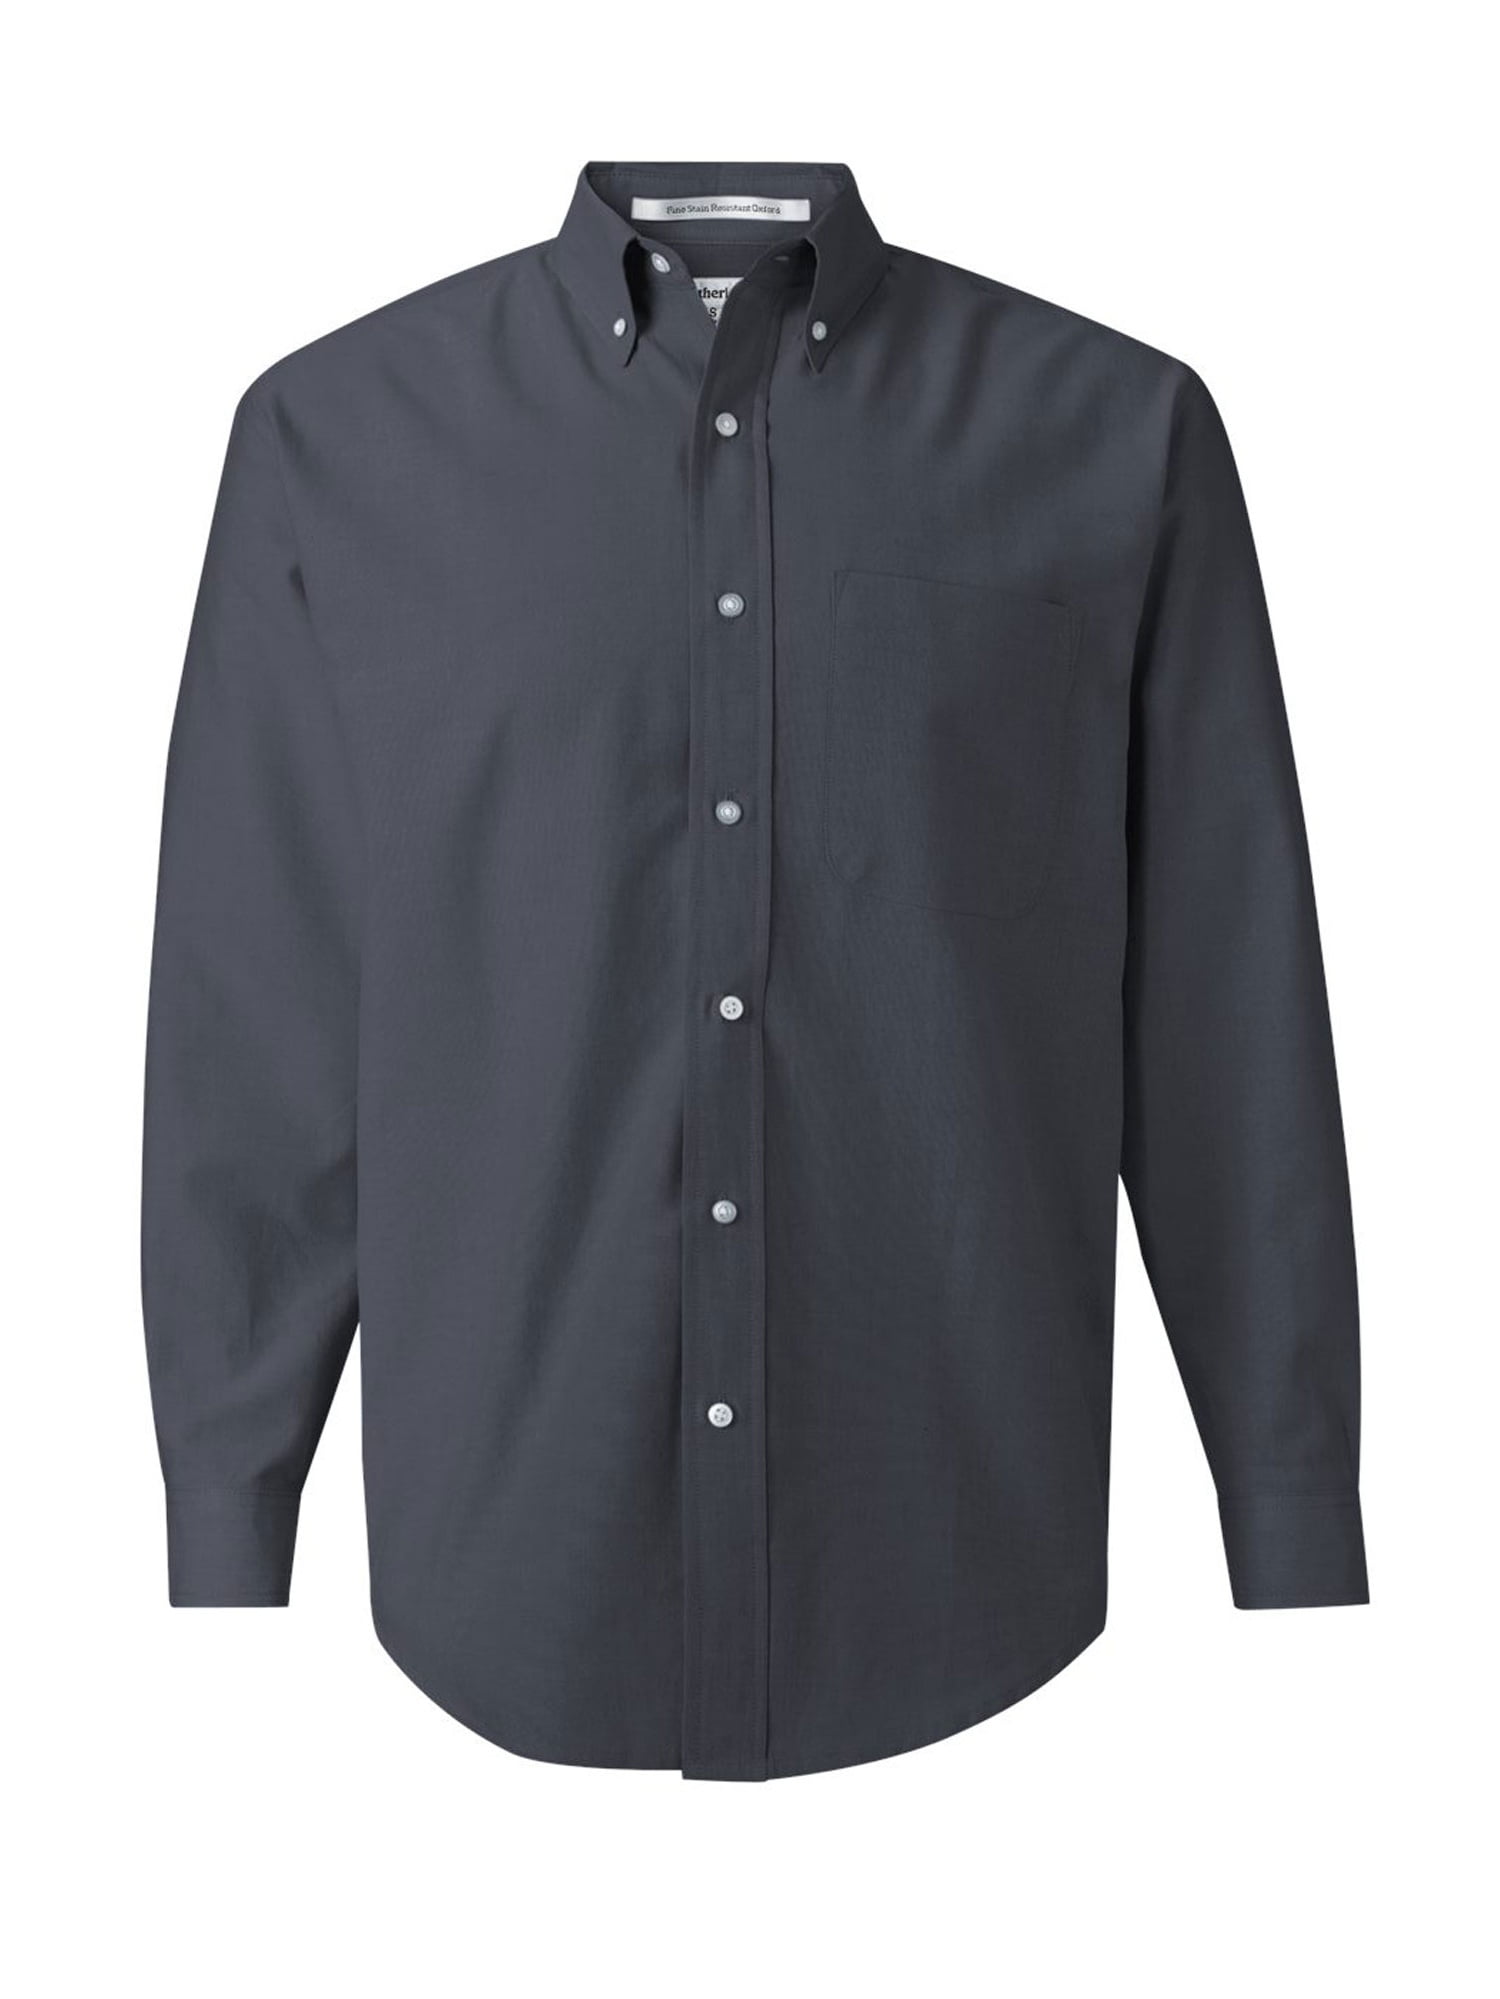 5XLT DARK GREY Ed Garments Mens Pinpoint Oxford Shirt